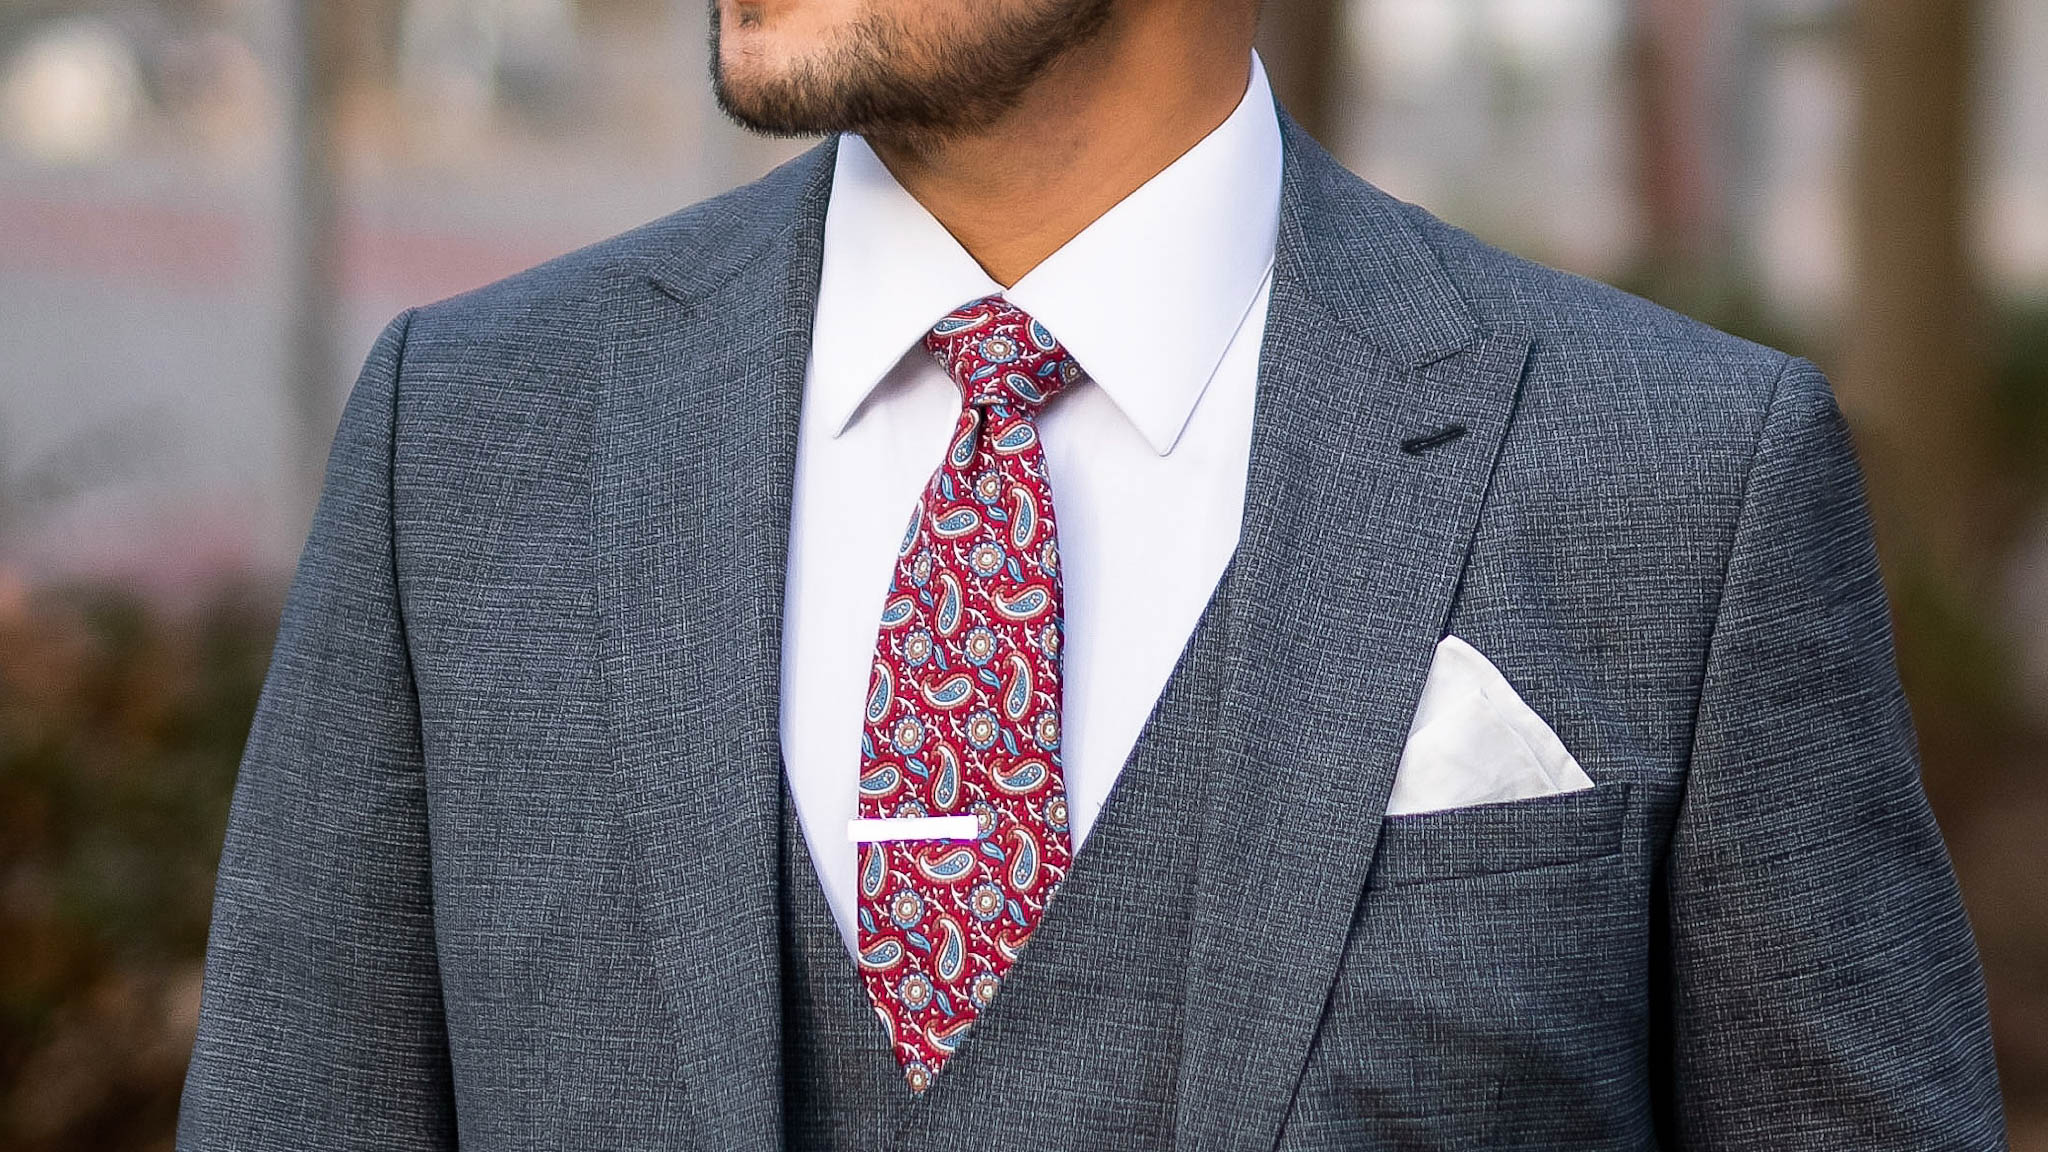 Grey three piece suit - chestie - paisley red tie - ties.com tie - white dress shirt - Tie clip on tie - dandy in the Bronx